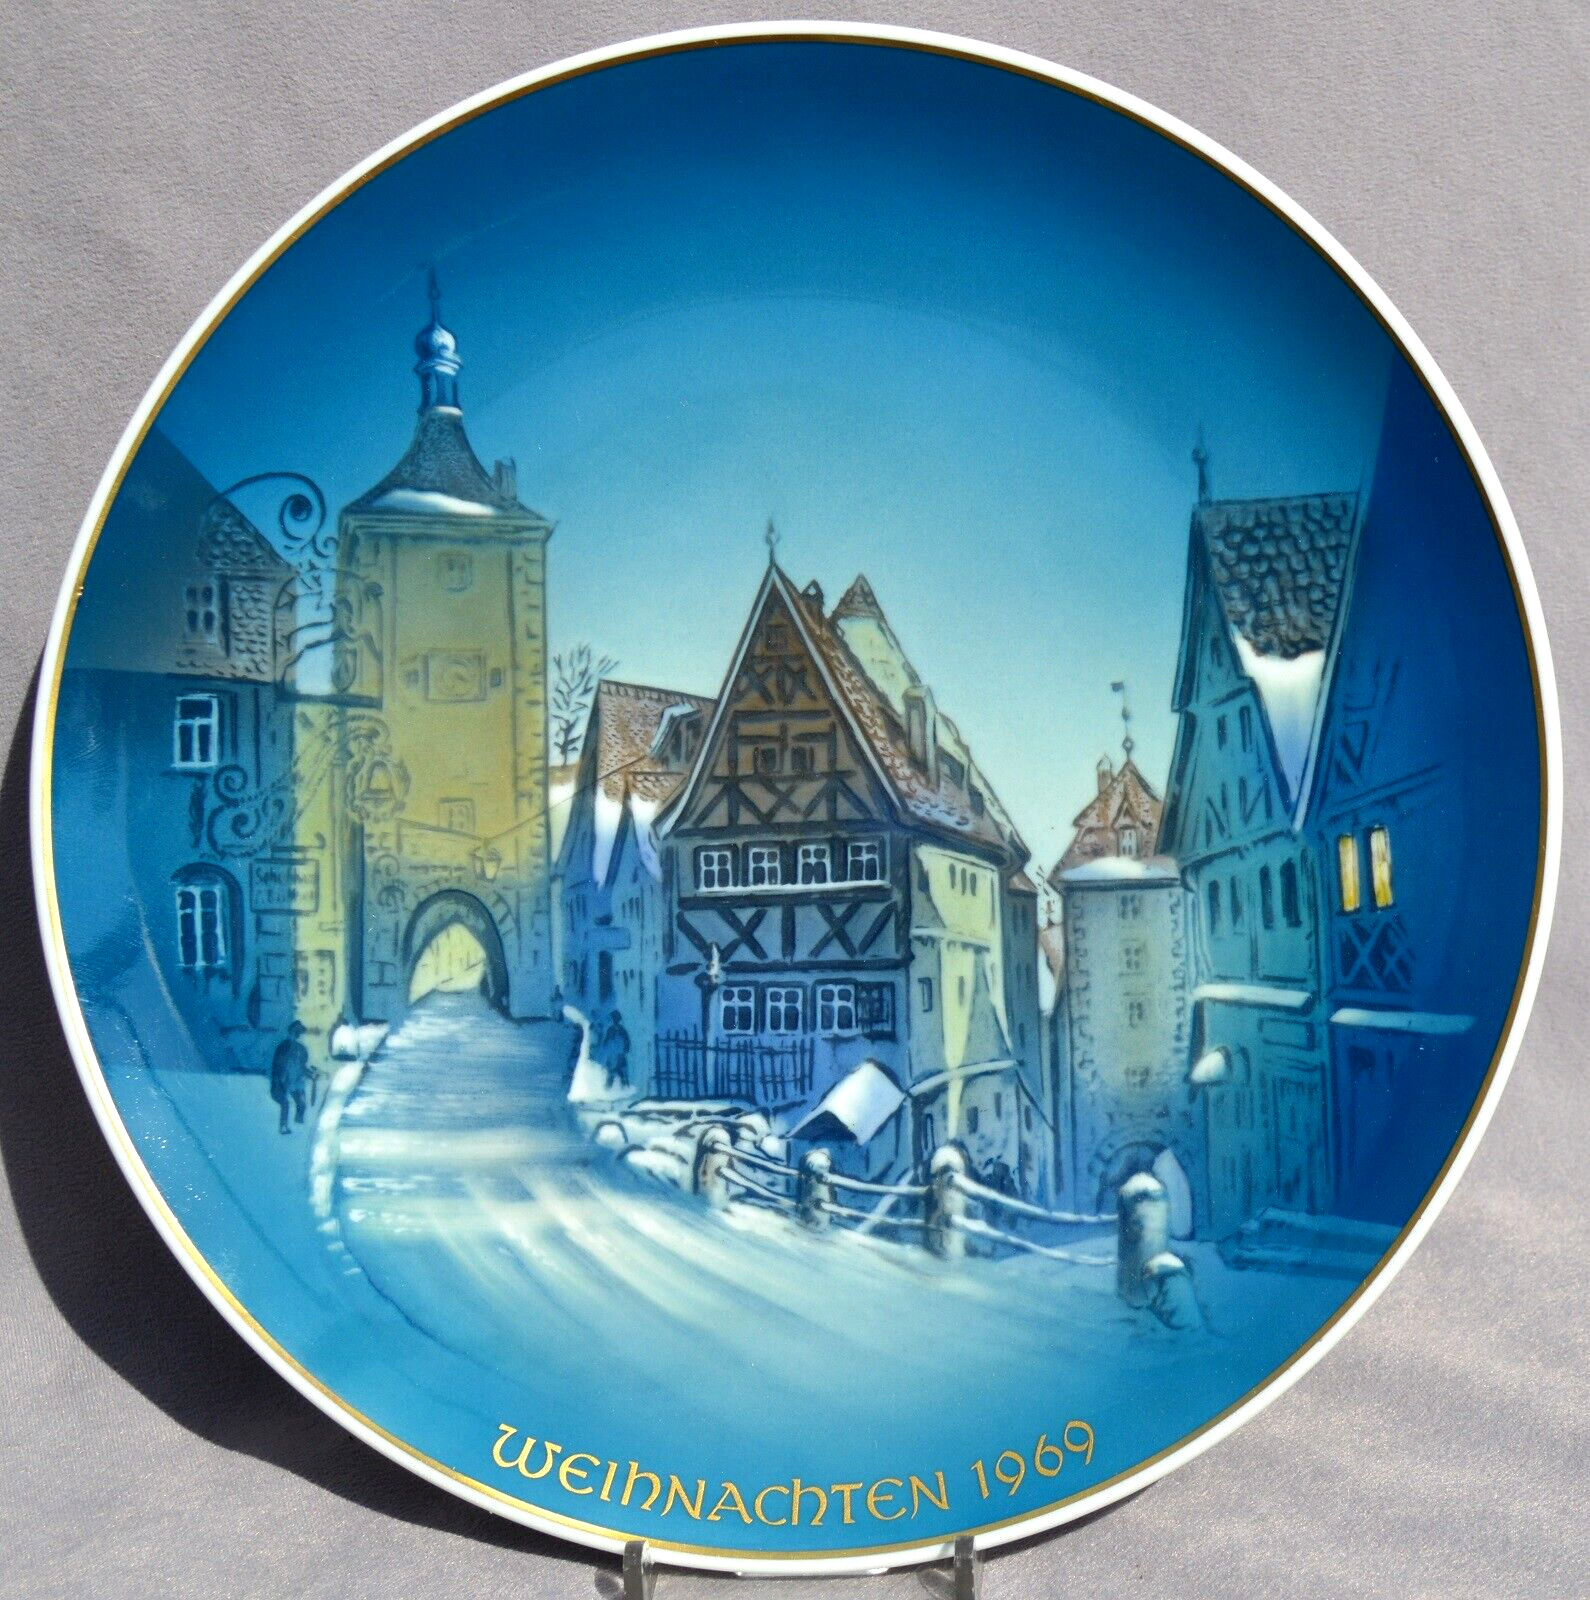 ROSENTHAL 1969 Christmas in Rothenburg Weihnachten Plate - MINT